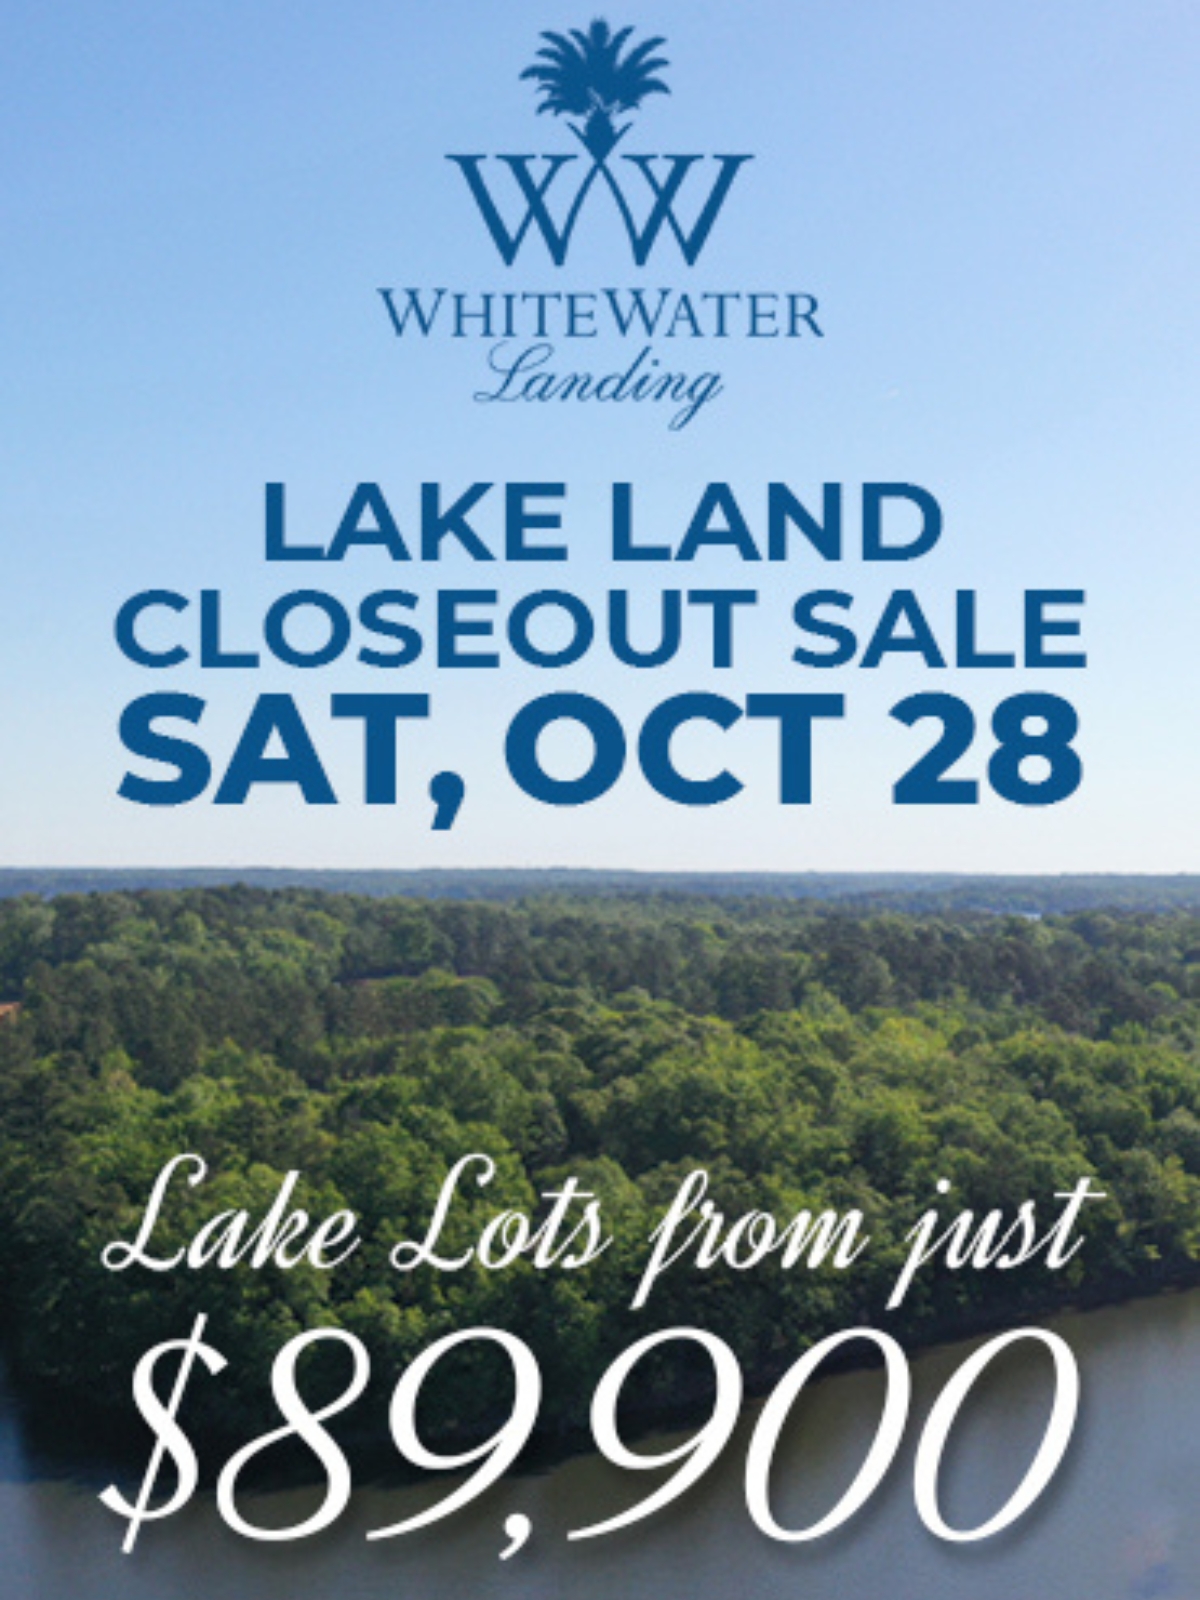 White Water Landing Lake Land Closeout Sale Sat, Oct 28 Lake Lots from just $89,900